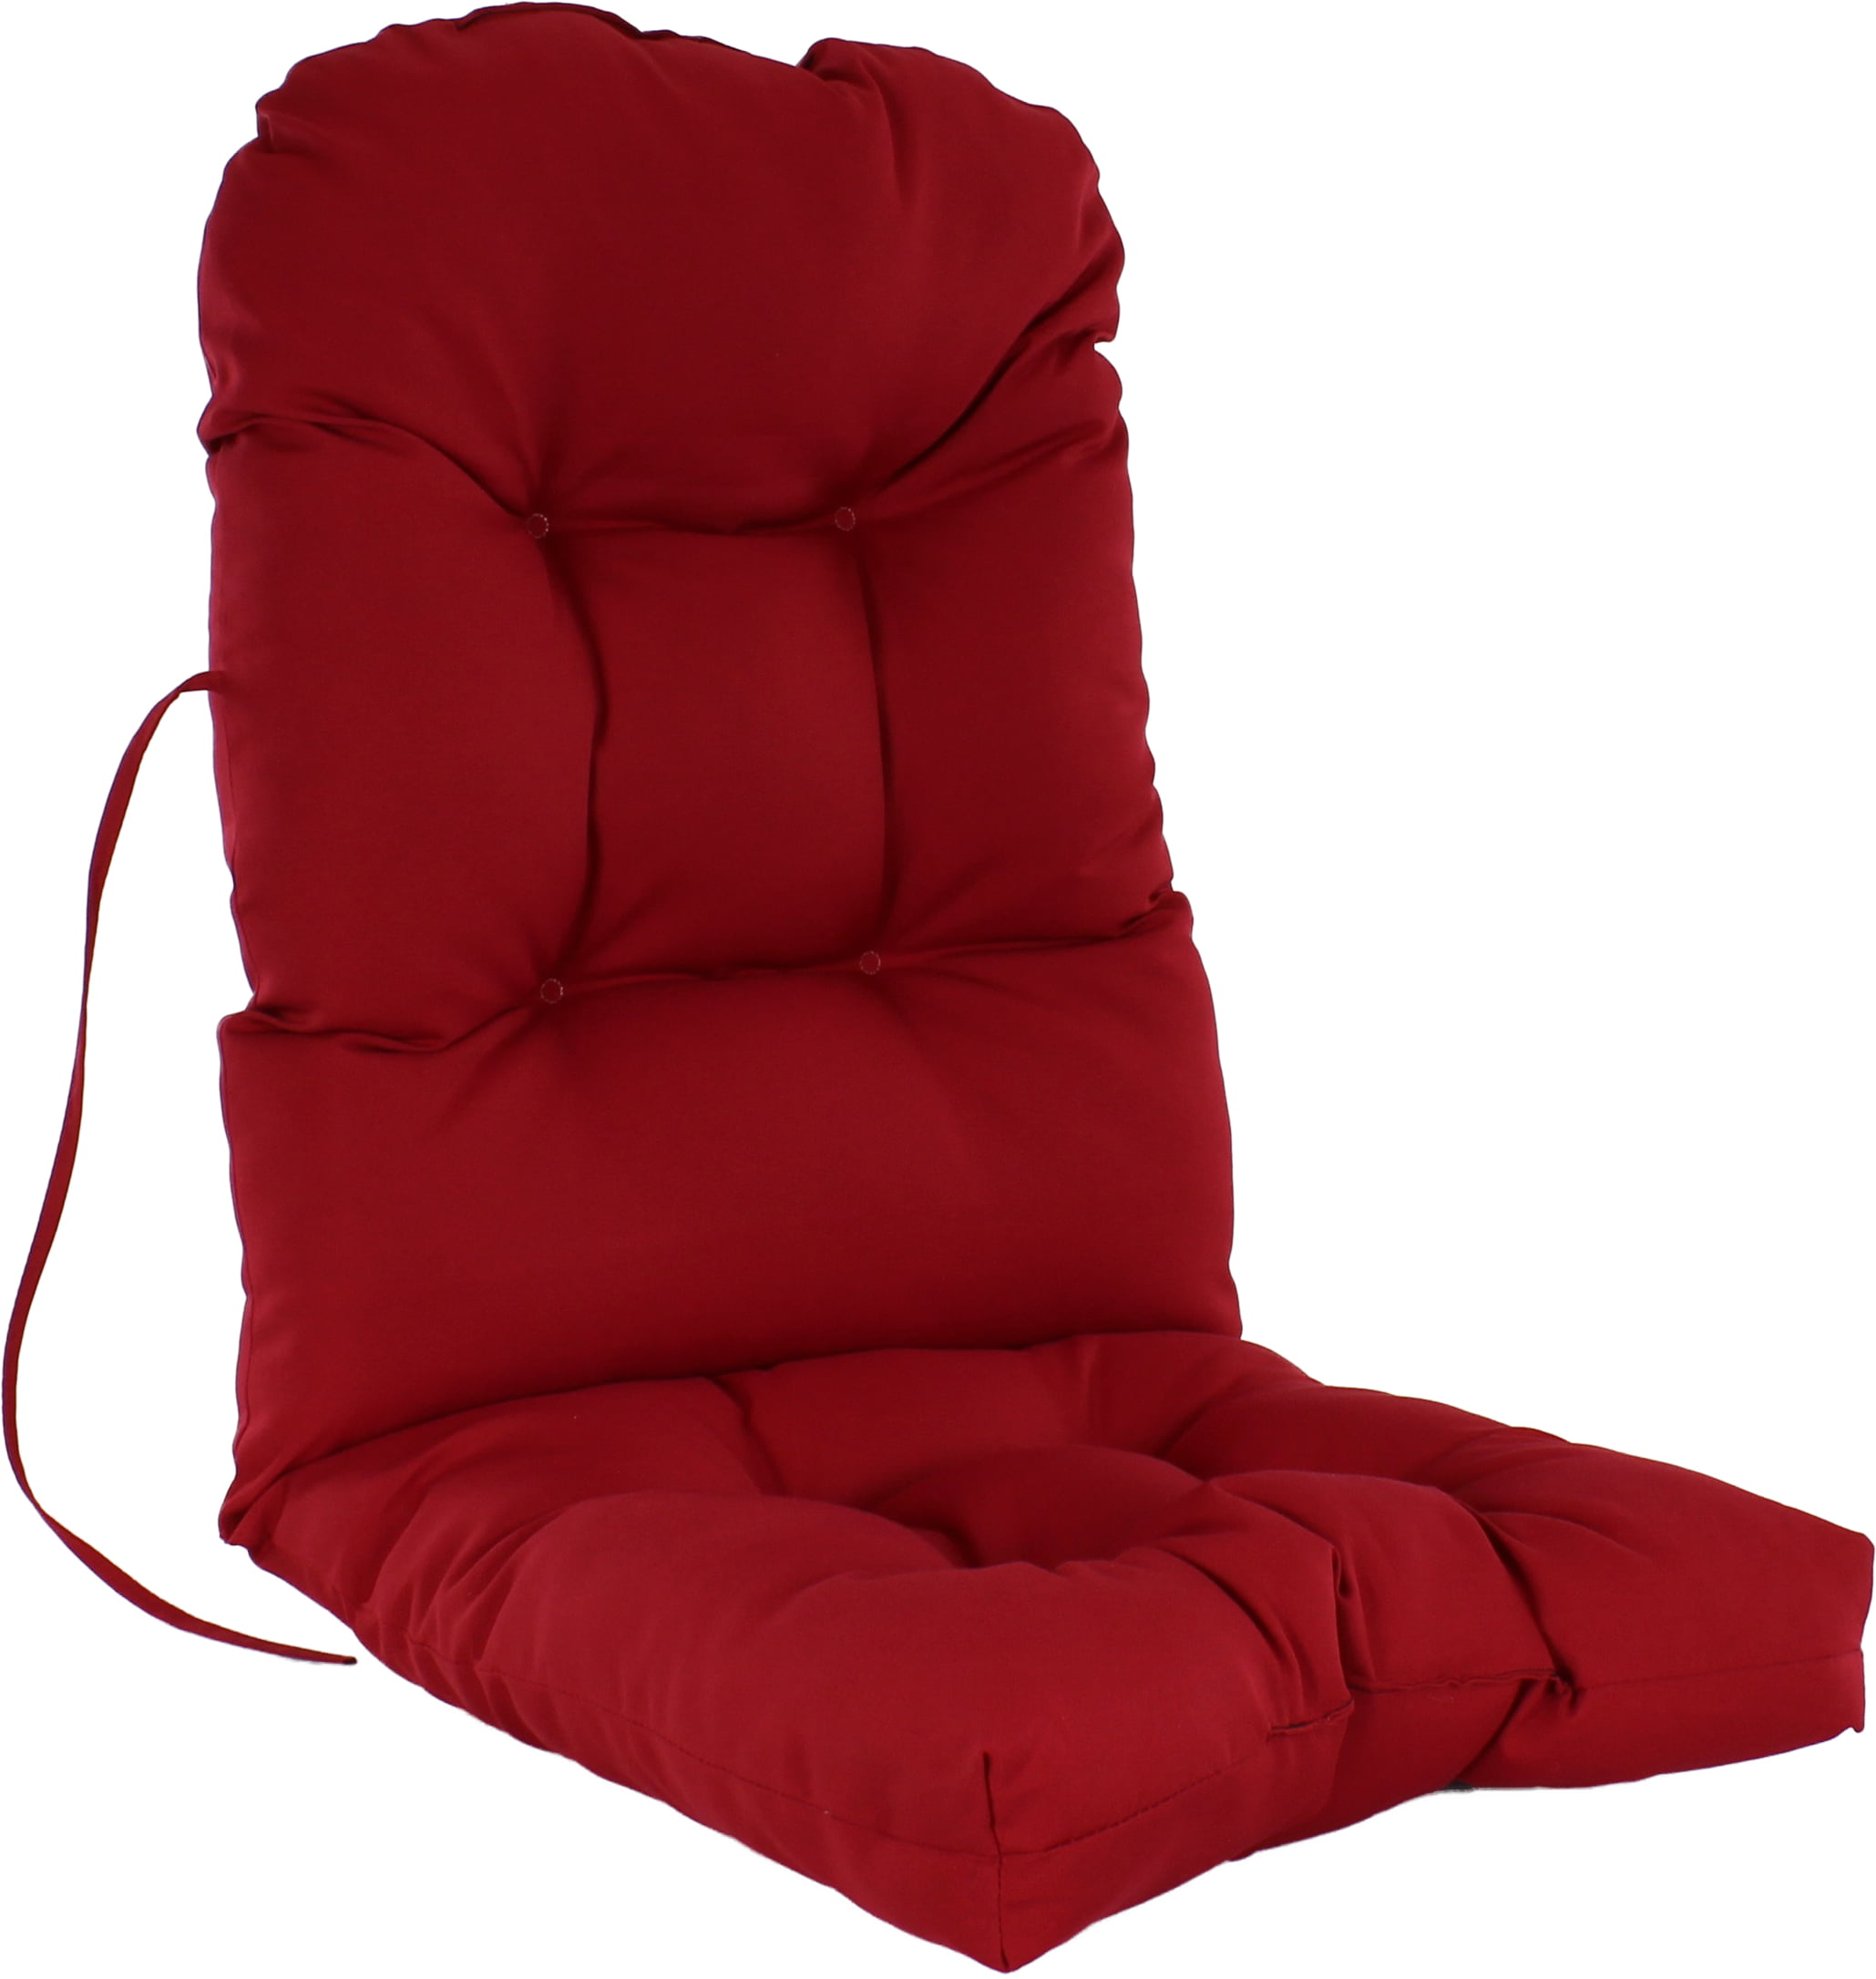 Indoor chair cushions